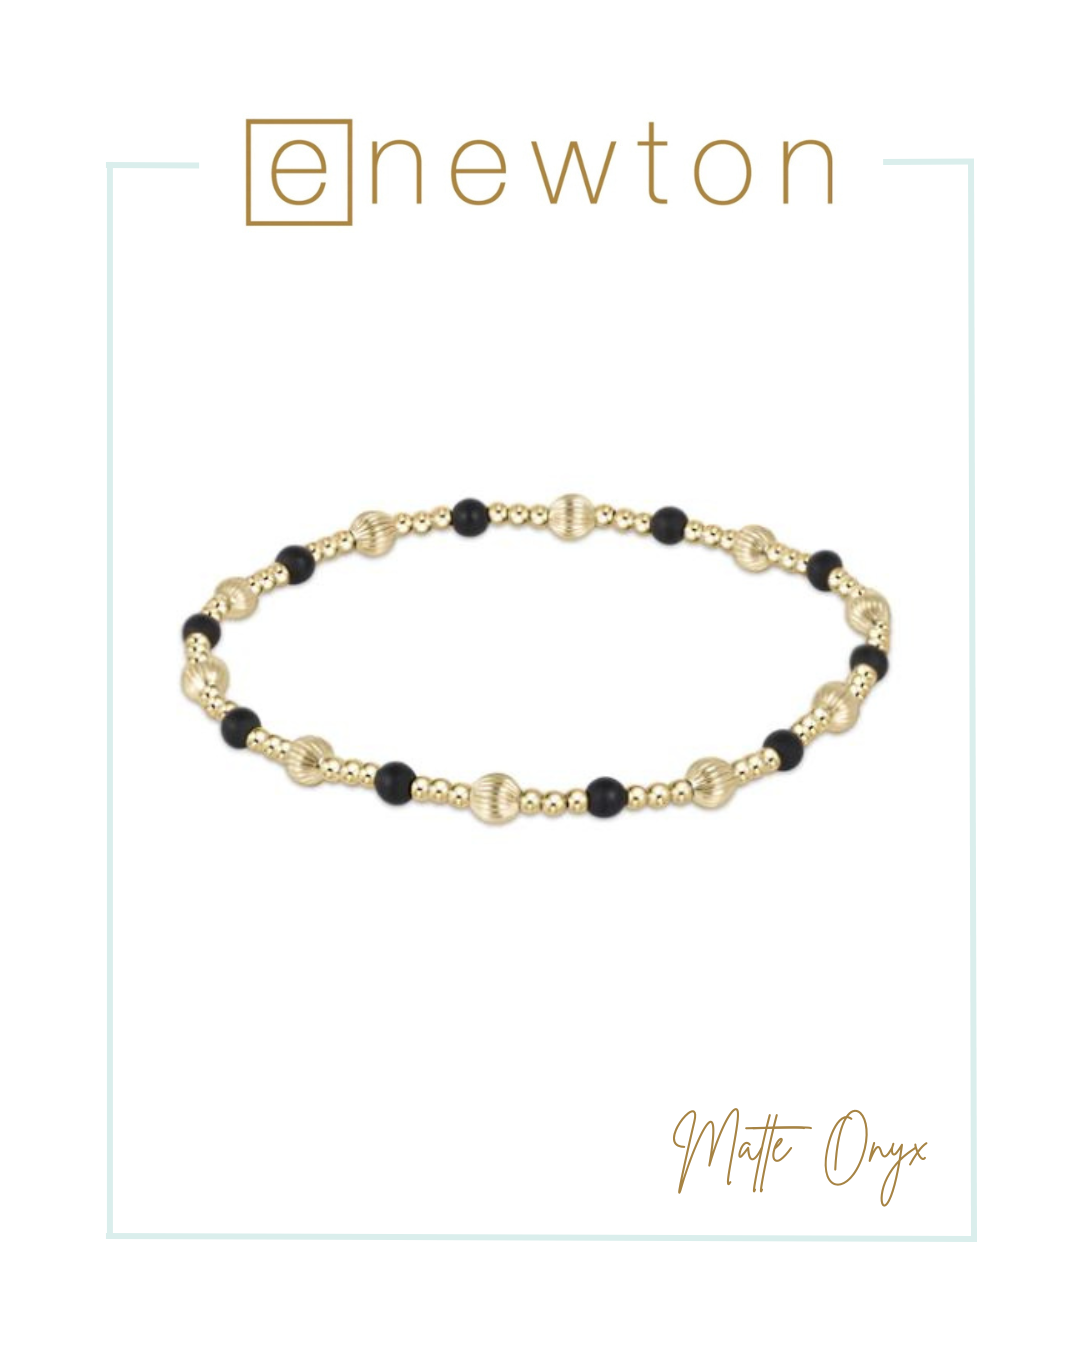 E Newton Dignity Sincerity Pattern 4mm Bead Bracelet - Matte Onyx-Bracelets-ENEWTON-The Village Shoppe, Women’s Fashion Boutique, Shop Online and In Store - Located in Muscle Shoals, AL.